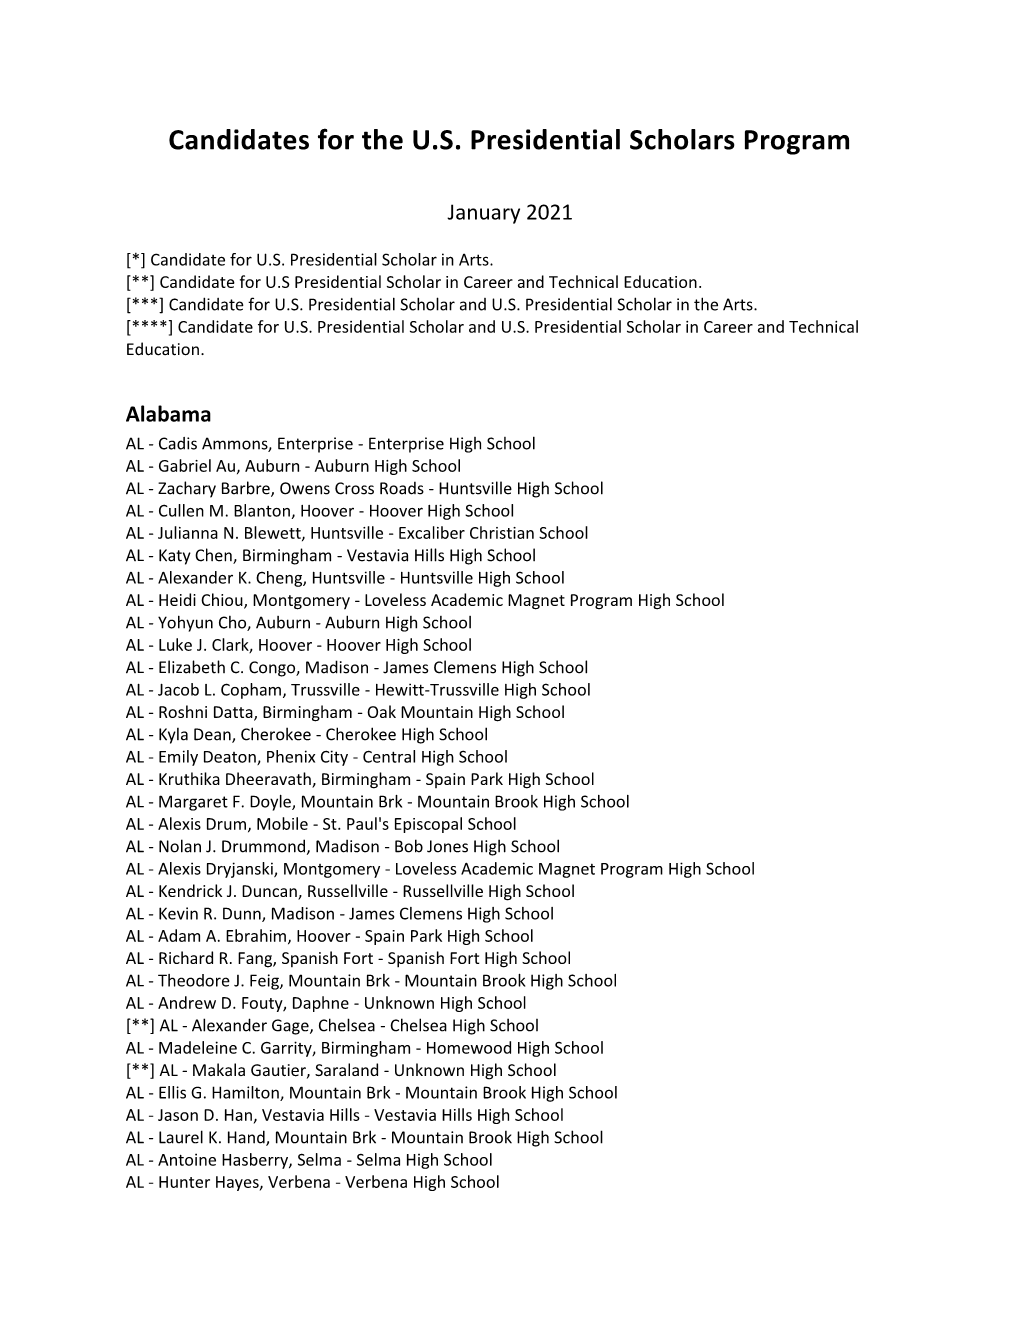 2021 Candidates for the U.S. Presidential Scholars Program (PDF)